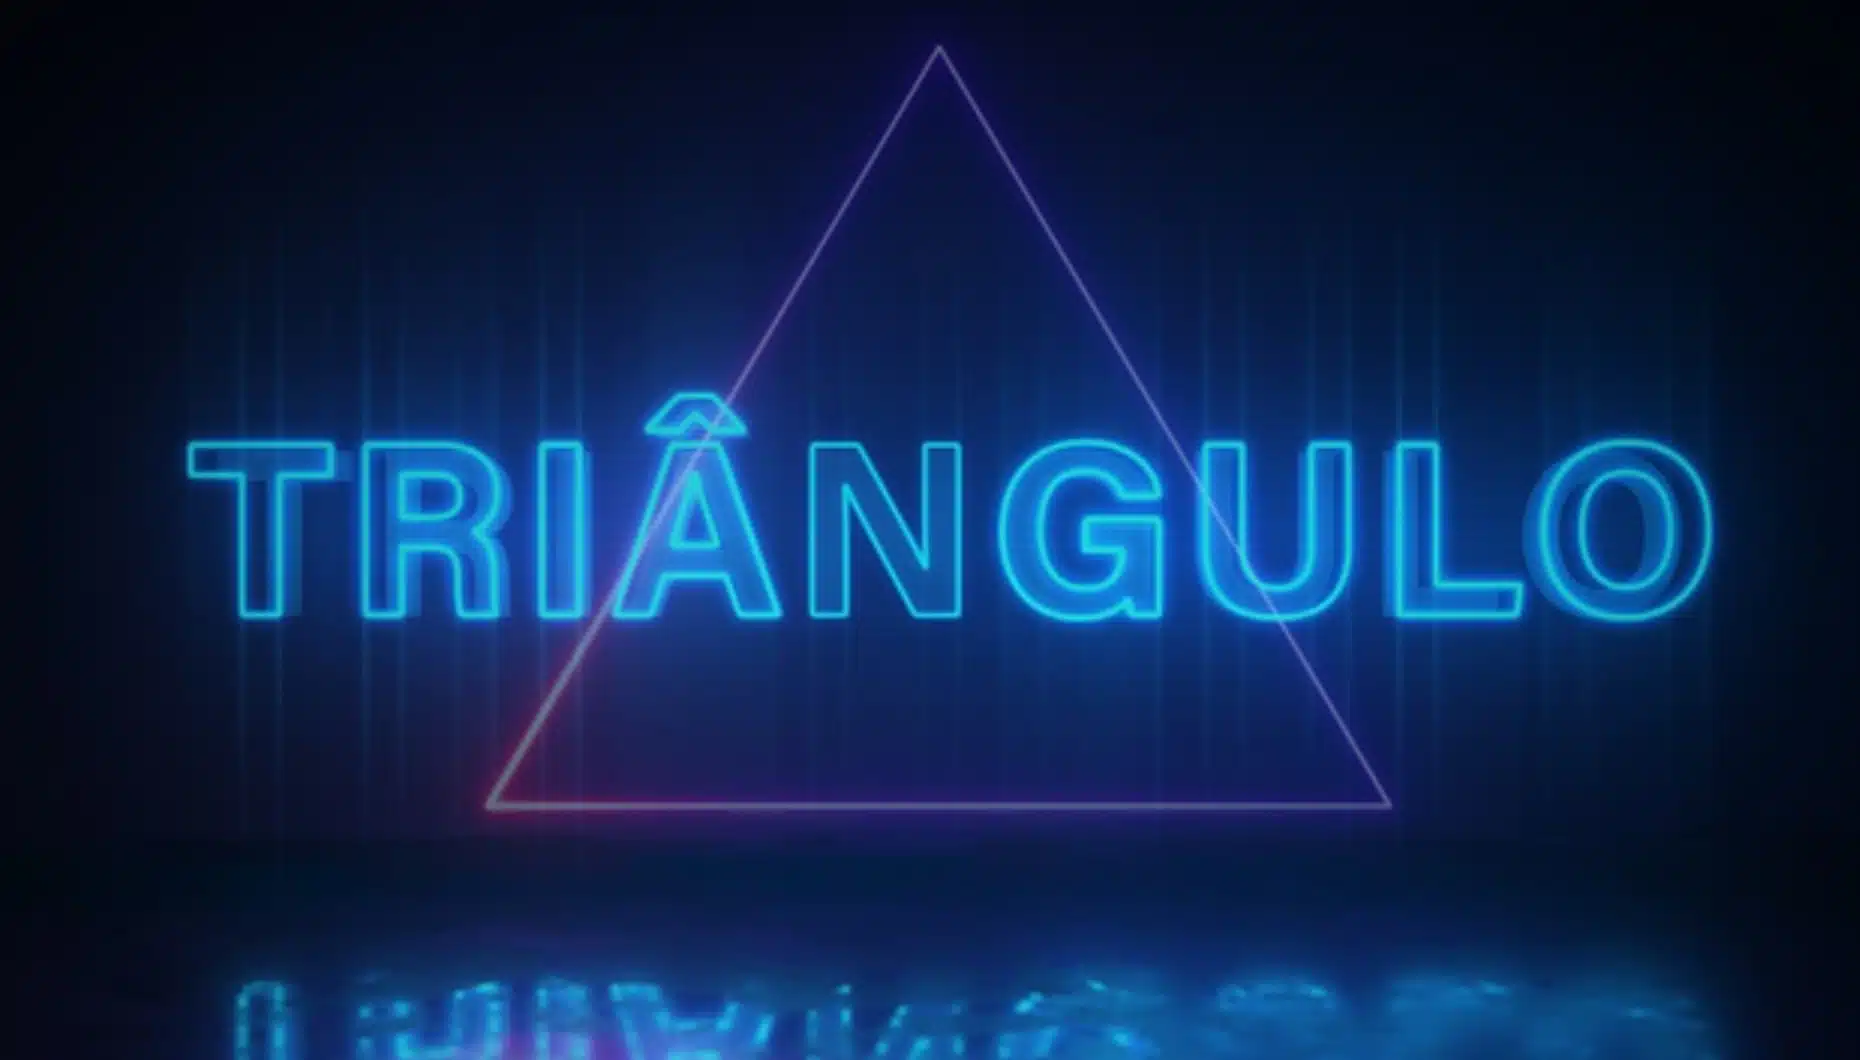 O Triângulo, Tvi, Logo